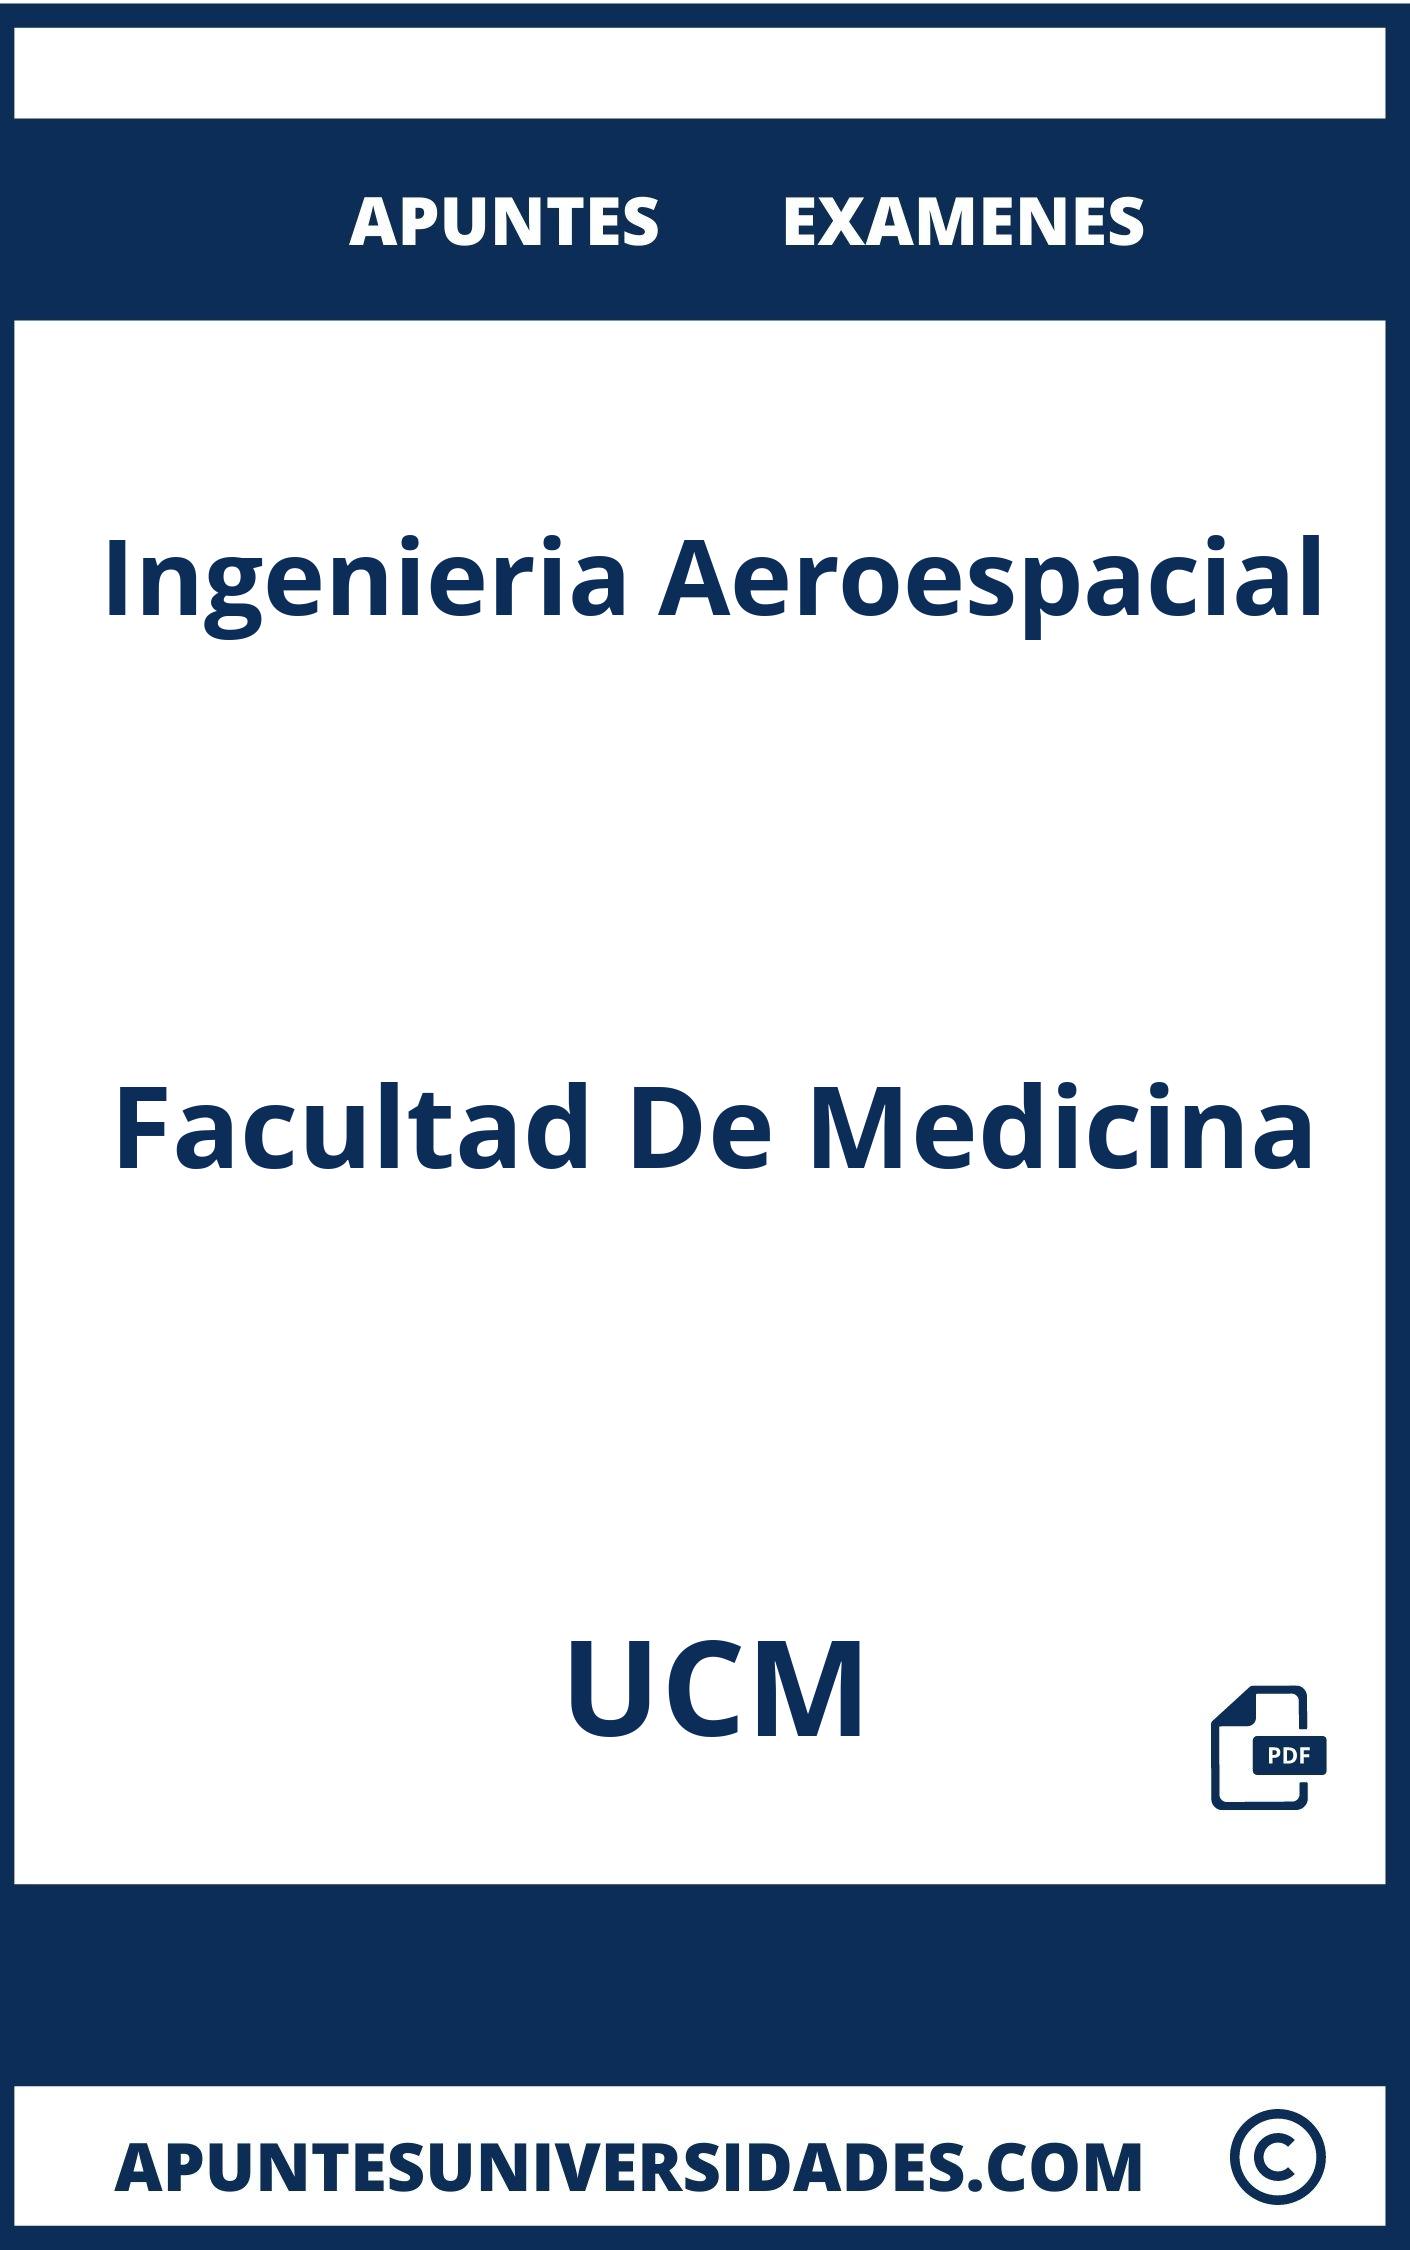 Ingenieria Aeroespacial UCM Apuntes Examenes